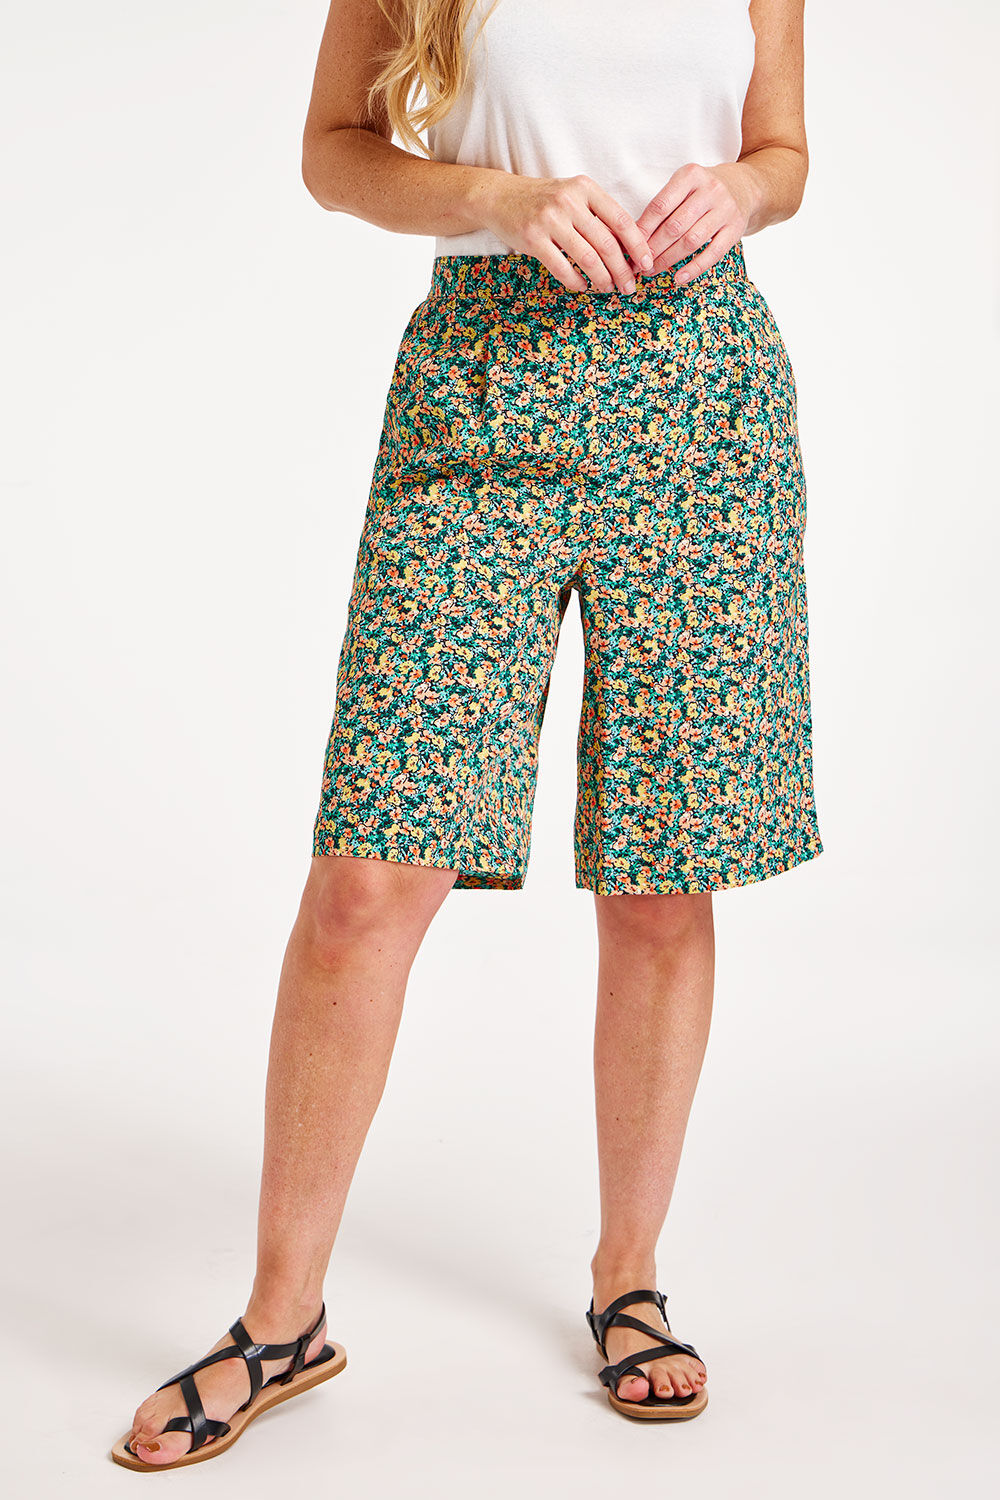 Bonmarche Green Ditsy Print Spun Viscose Elasticated Shorts, Size: 10